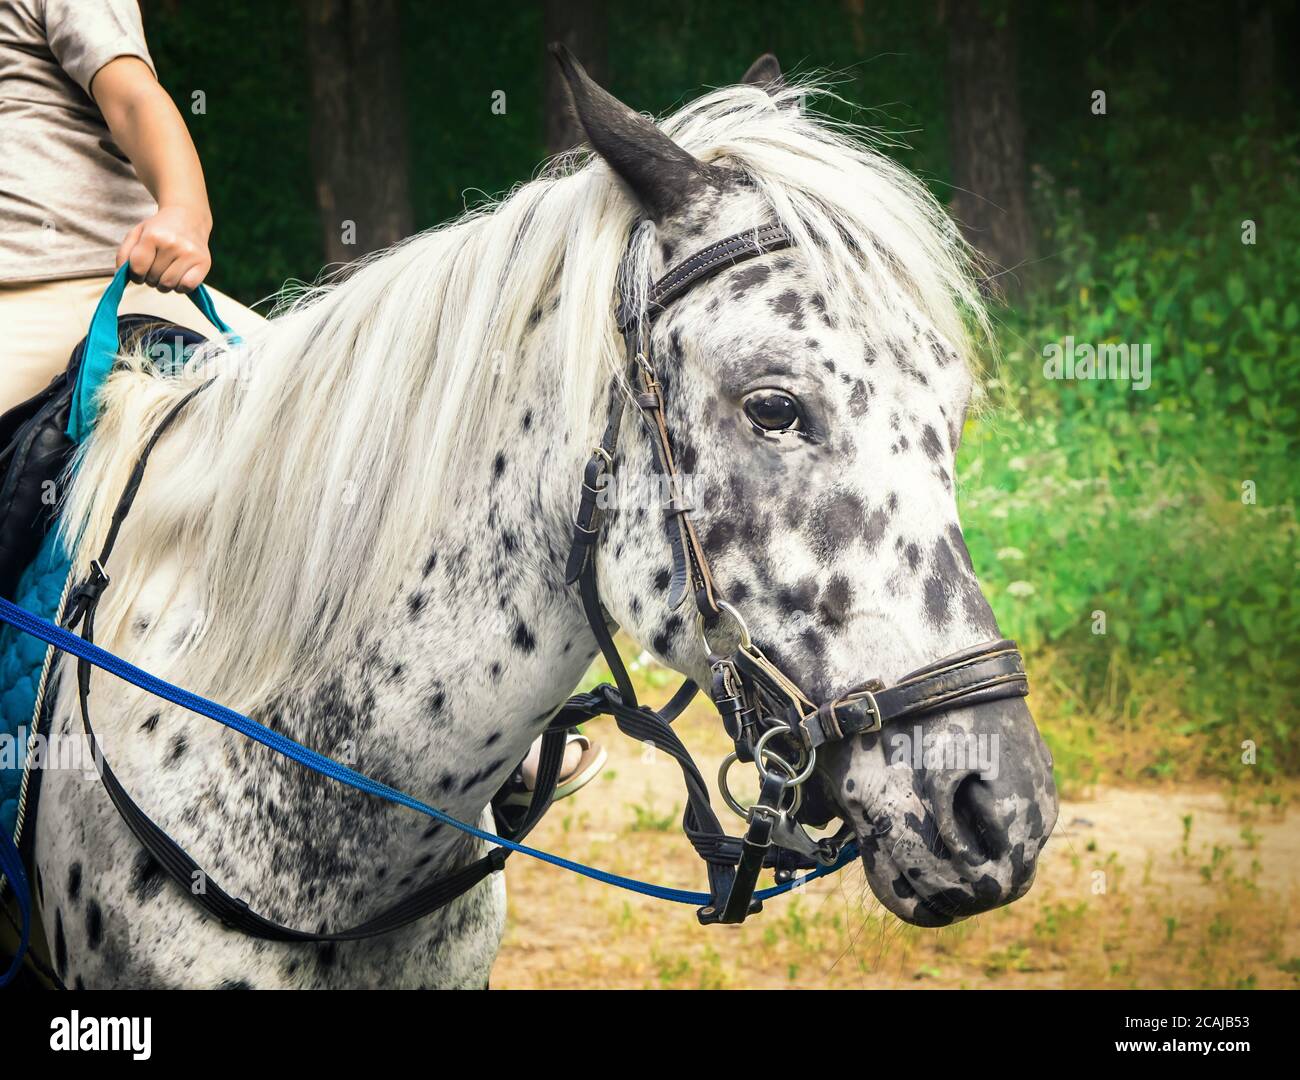 saddled cute white pony with black spots Stock Photo